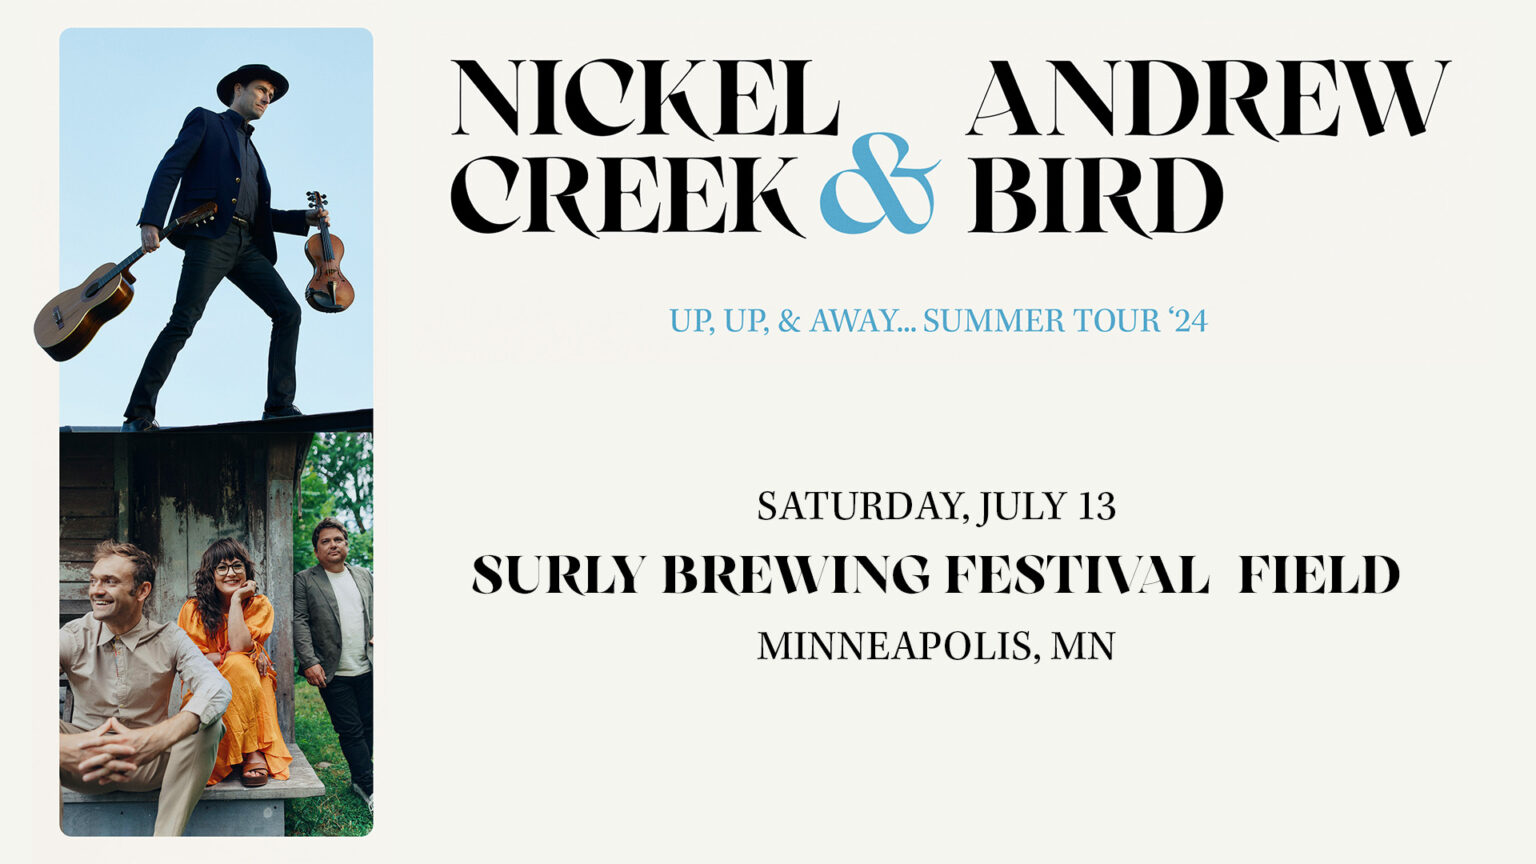 Nickel Creek & Andrew Bird Surly Brewing Festival Field Surly